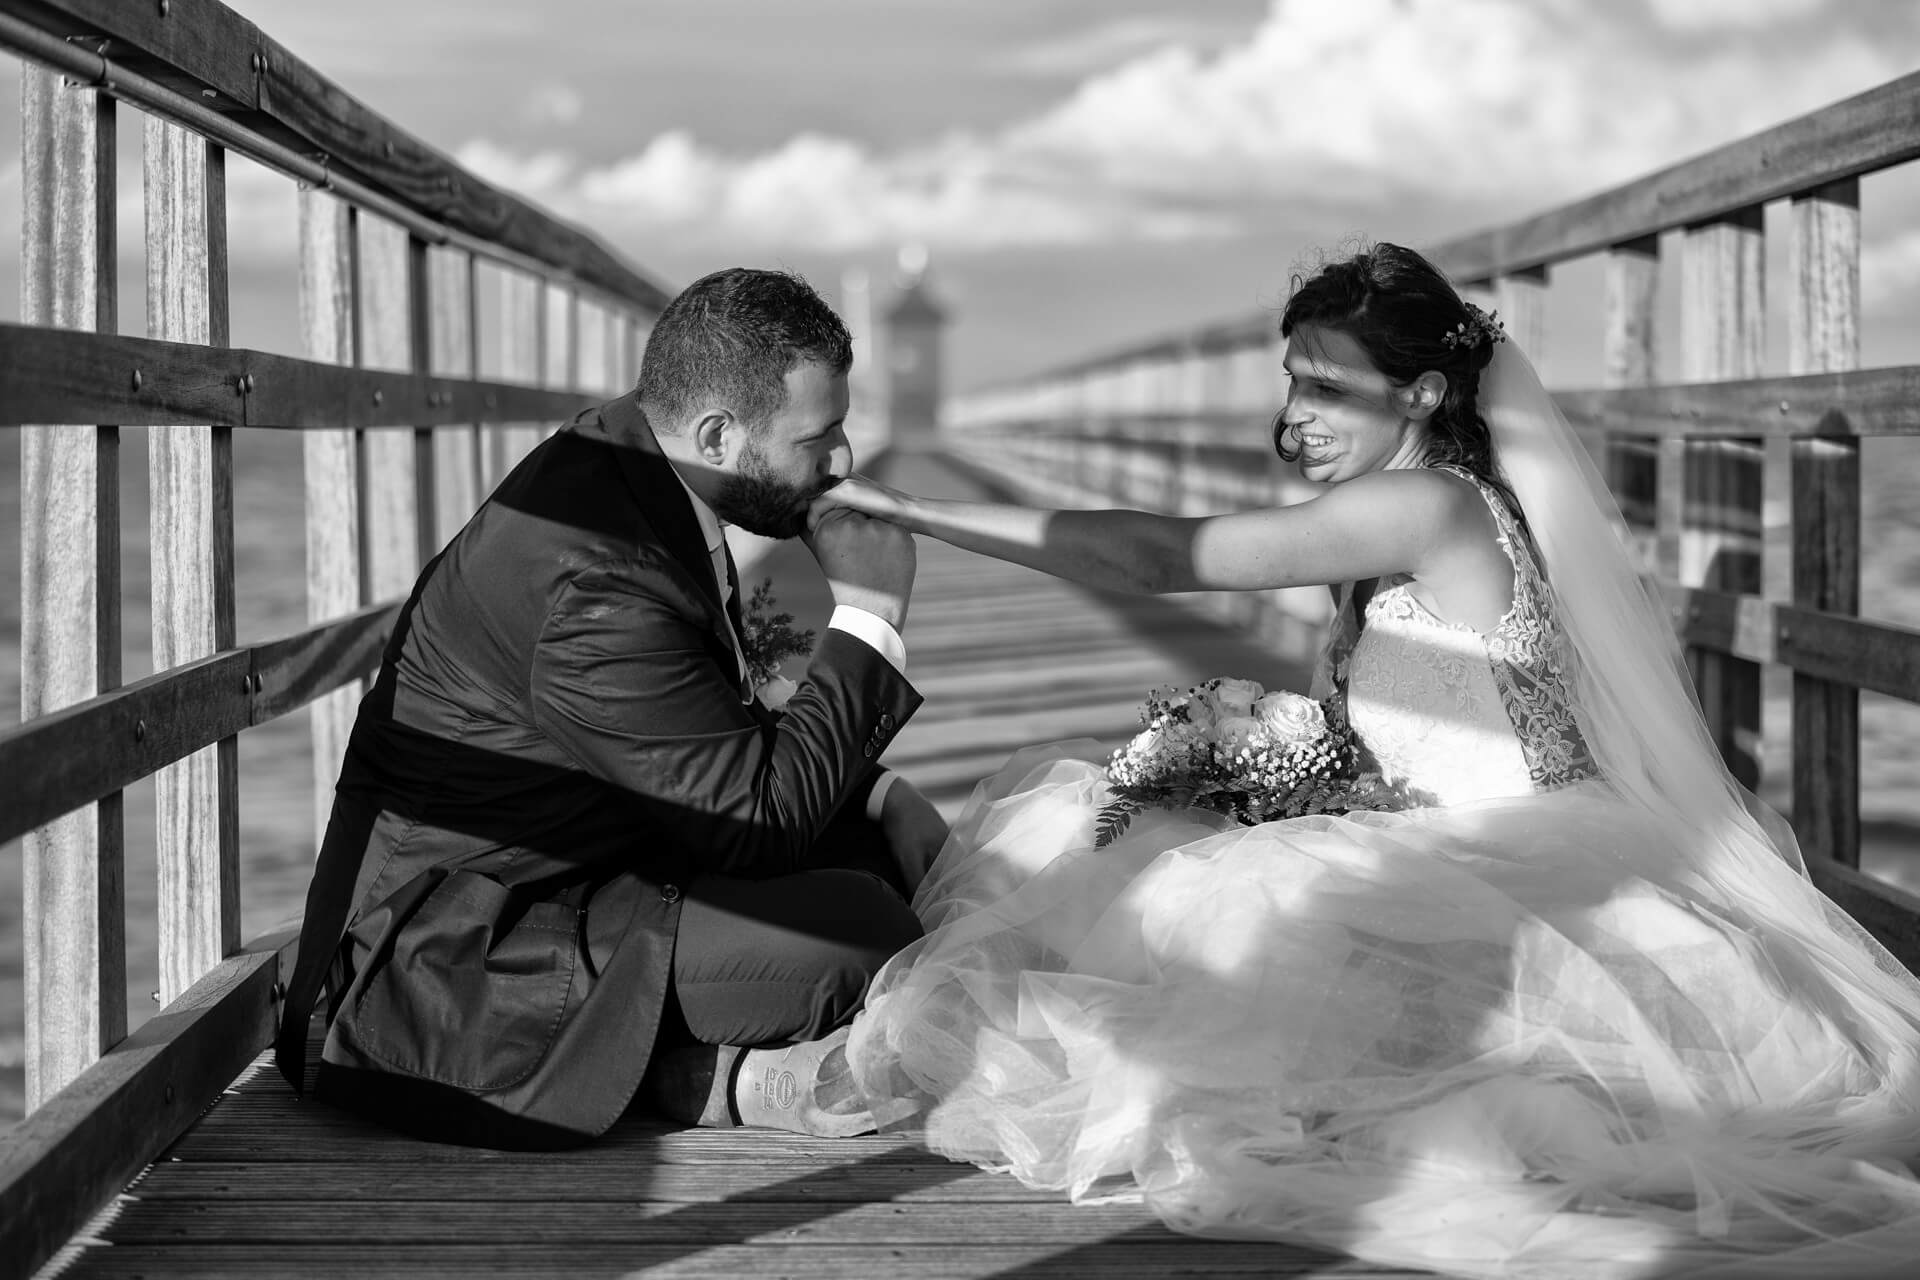 Fotografo matrimonio, cerimonie, anniversari - Marco Donà Lignano Udine Trieste